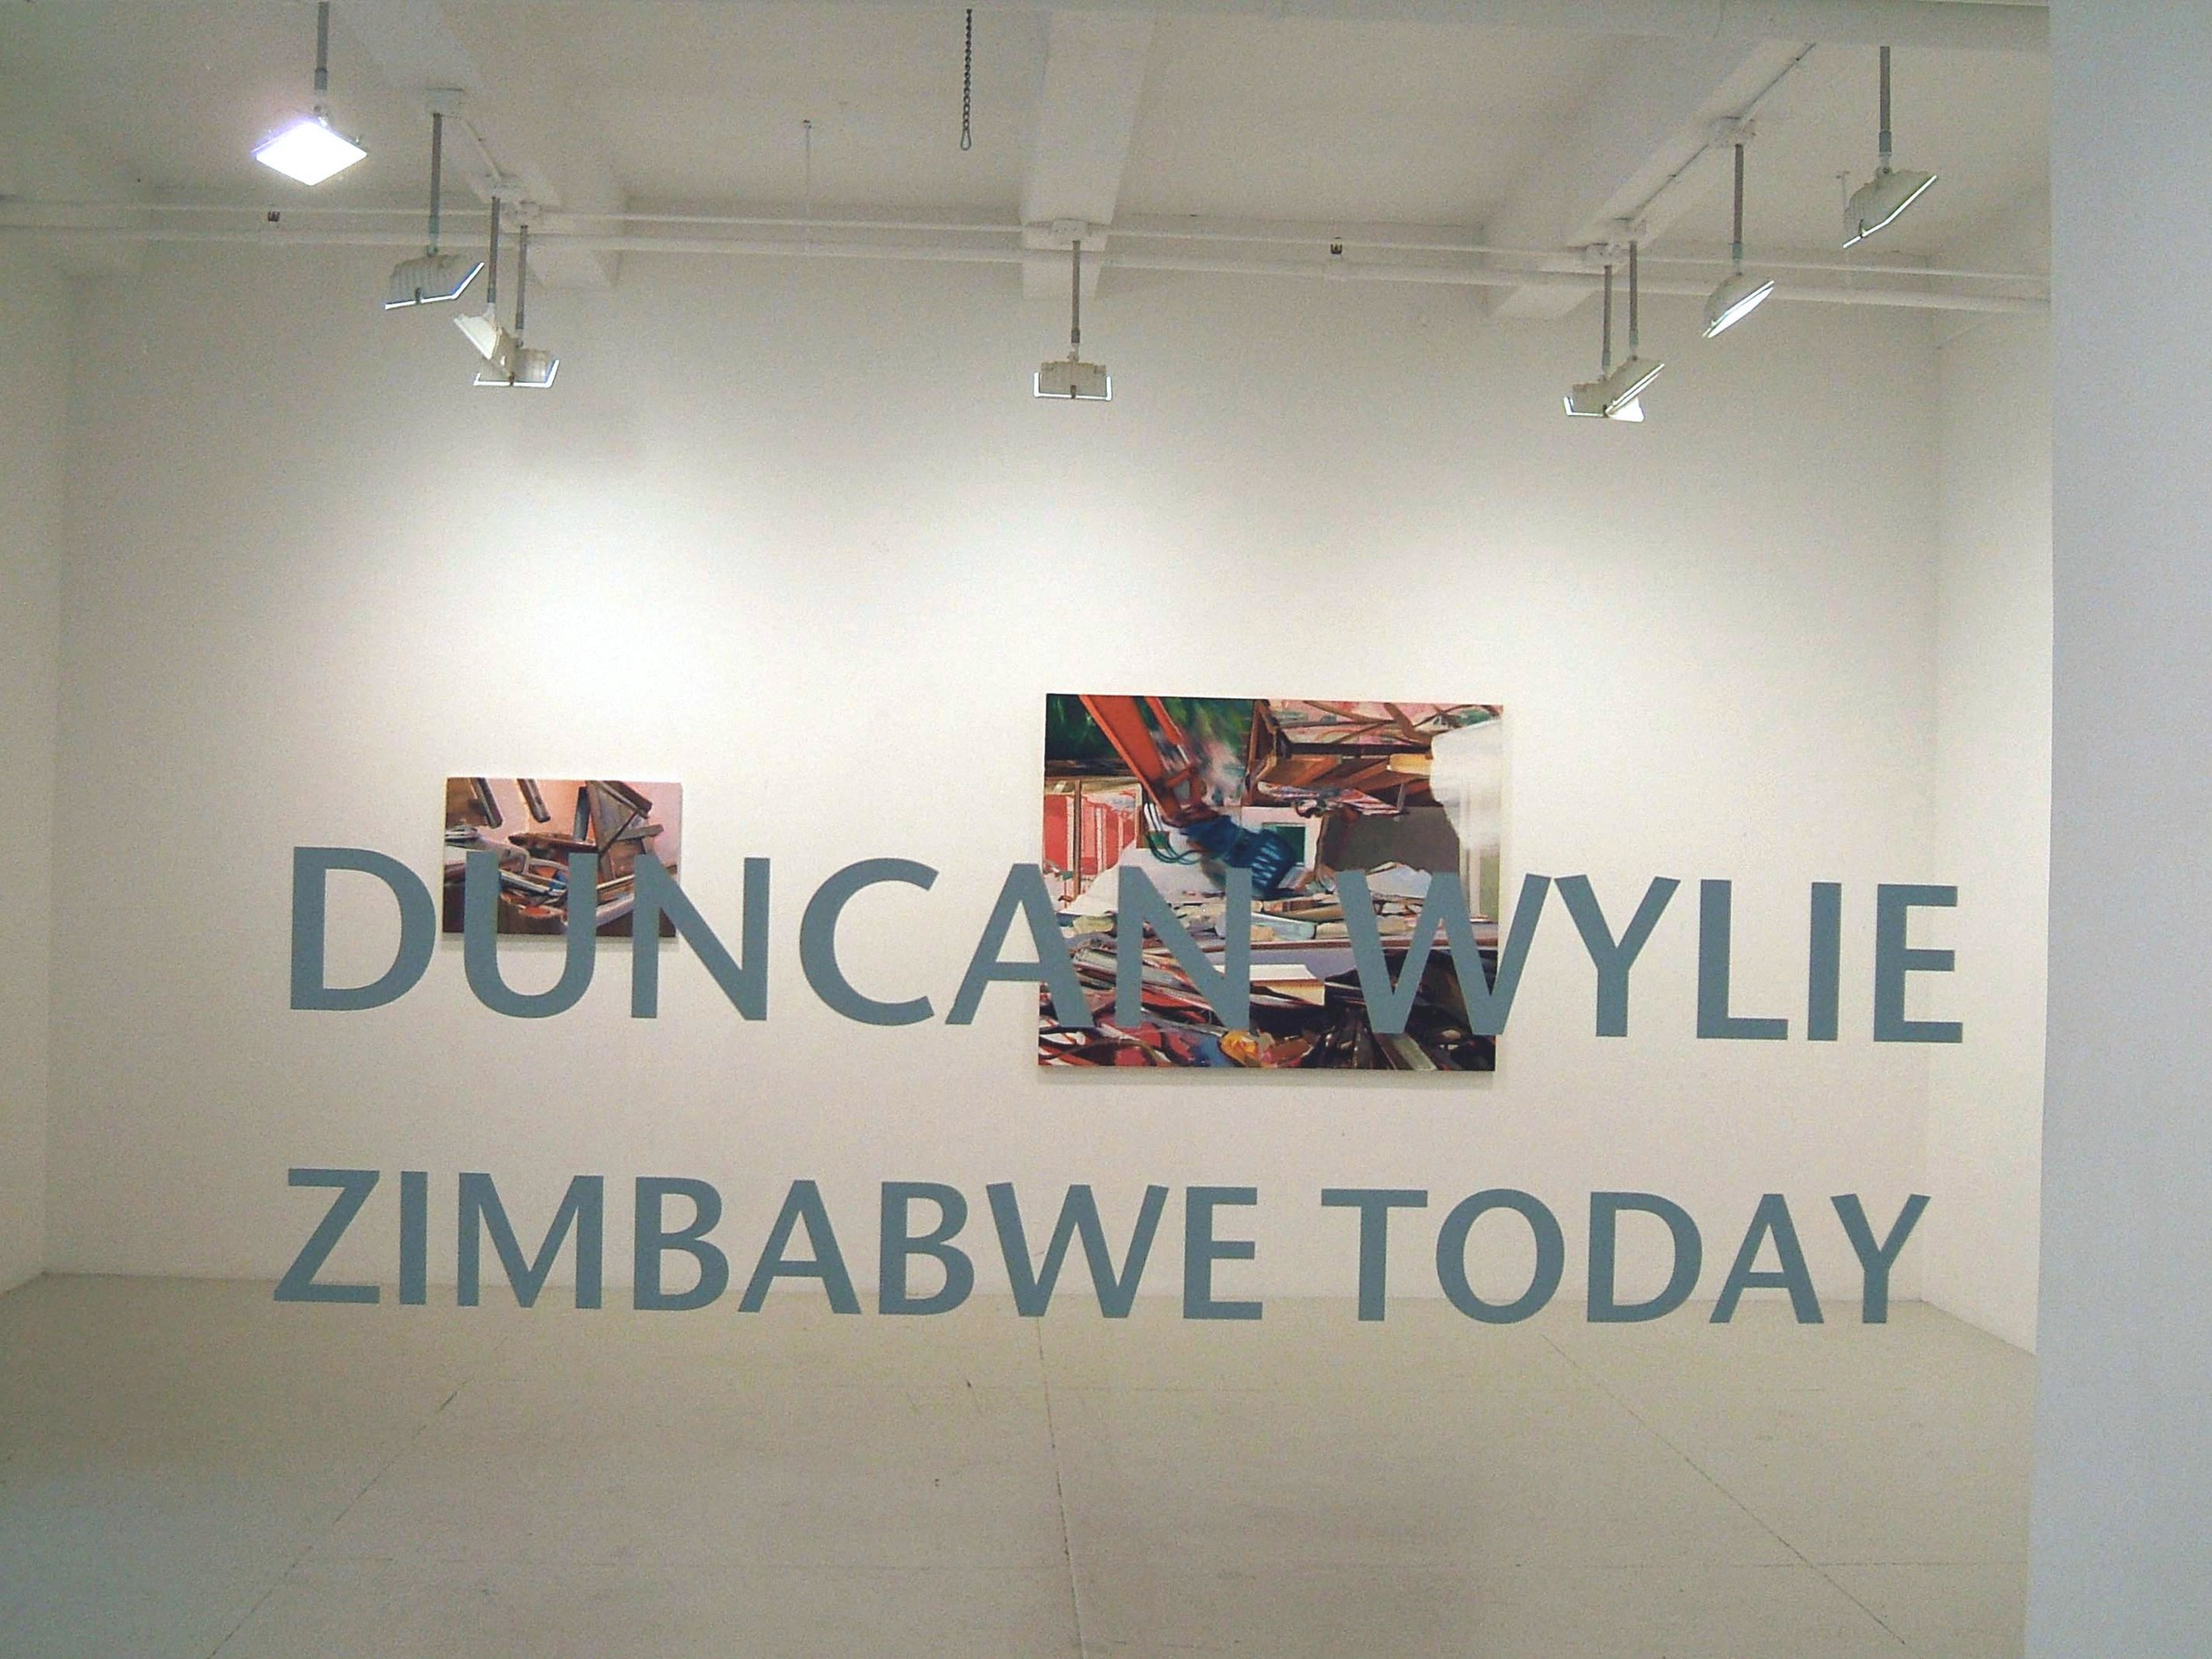   Zimbabwe Today  , Virgil Gallery, New York 2007  